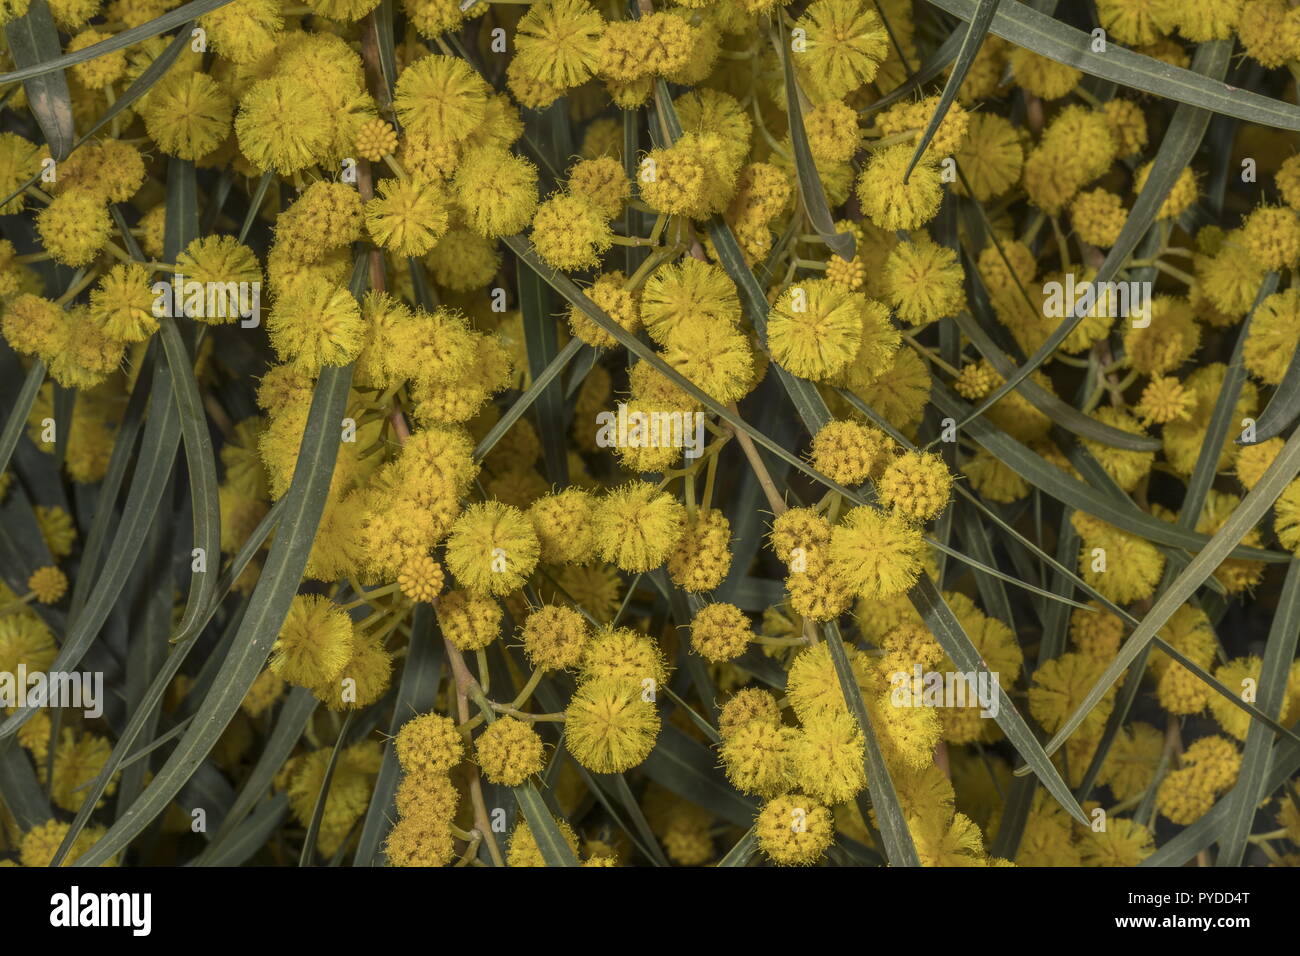 Coojong or Golden wreath wattle, Acacia saligna in full flower. Stock Photo